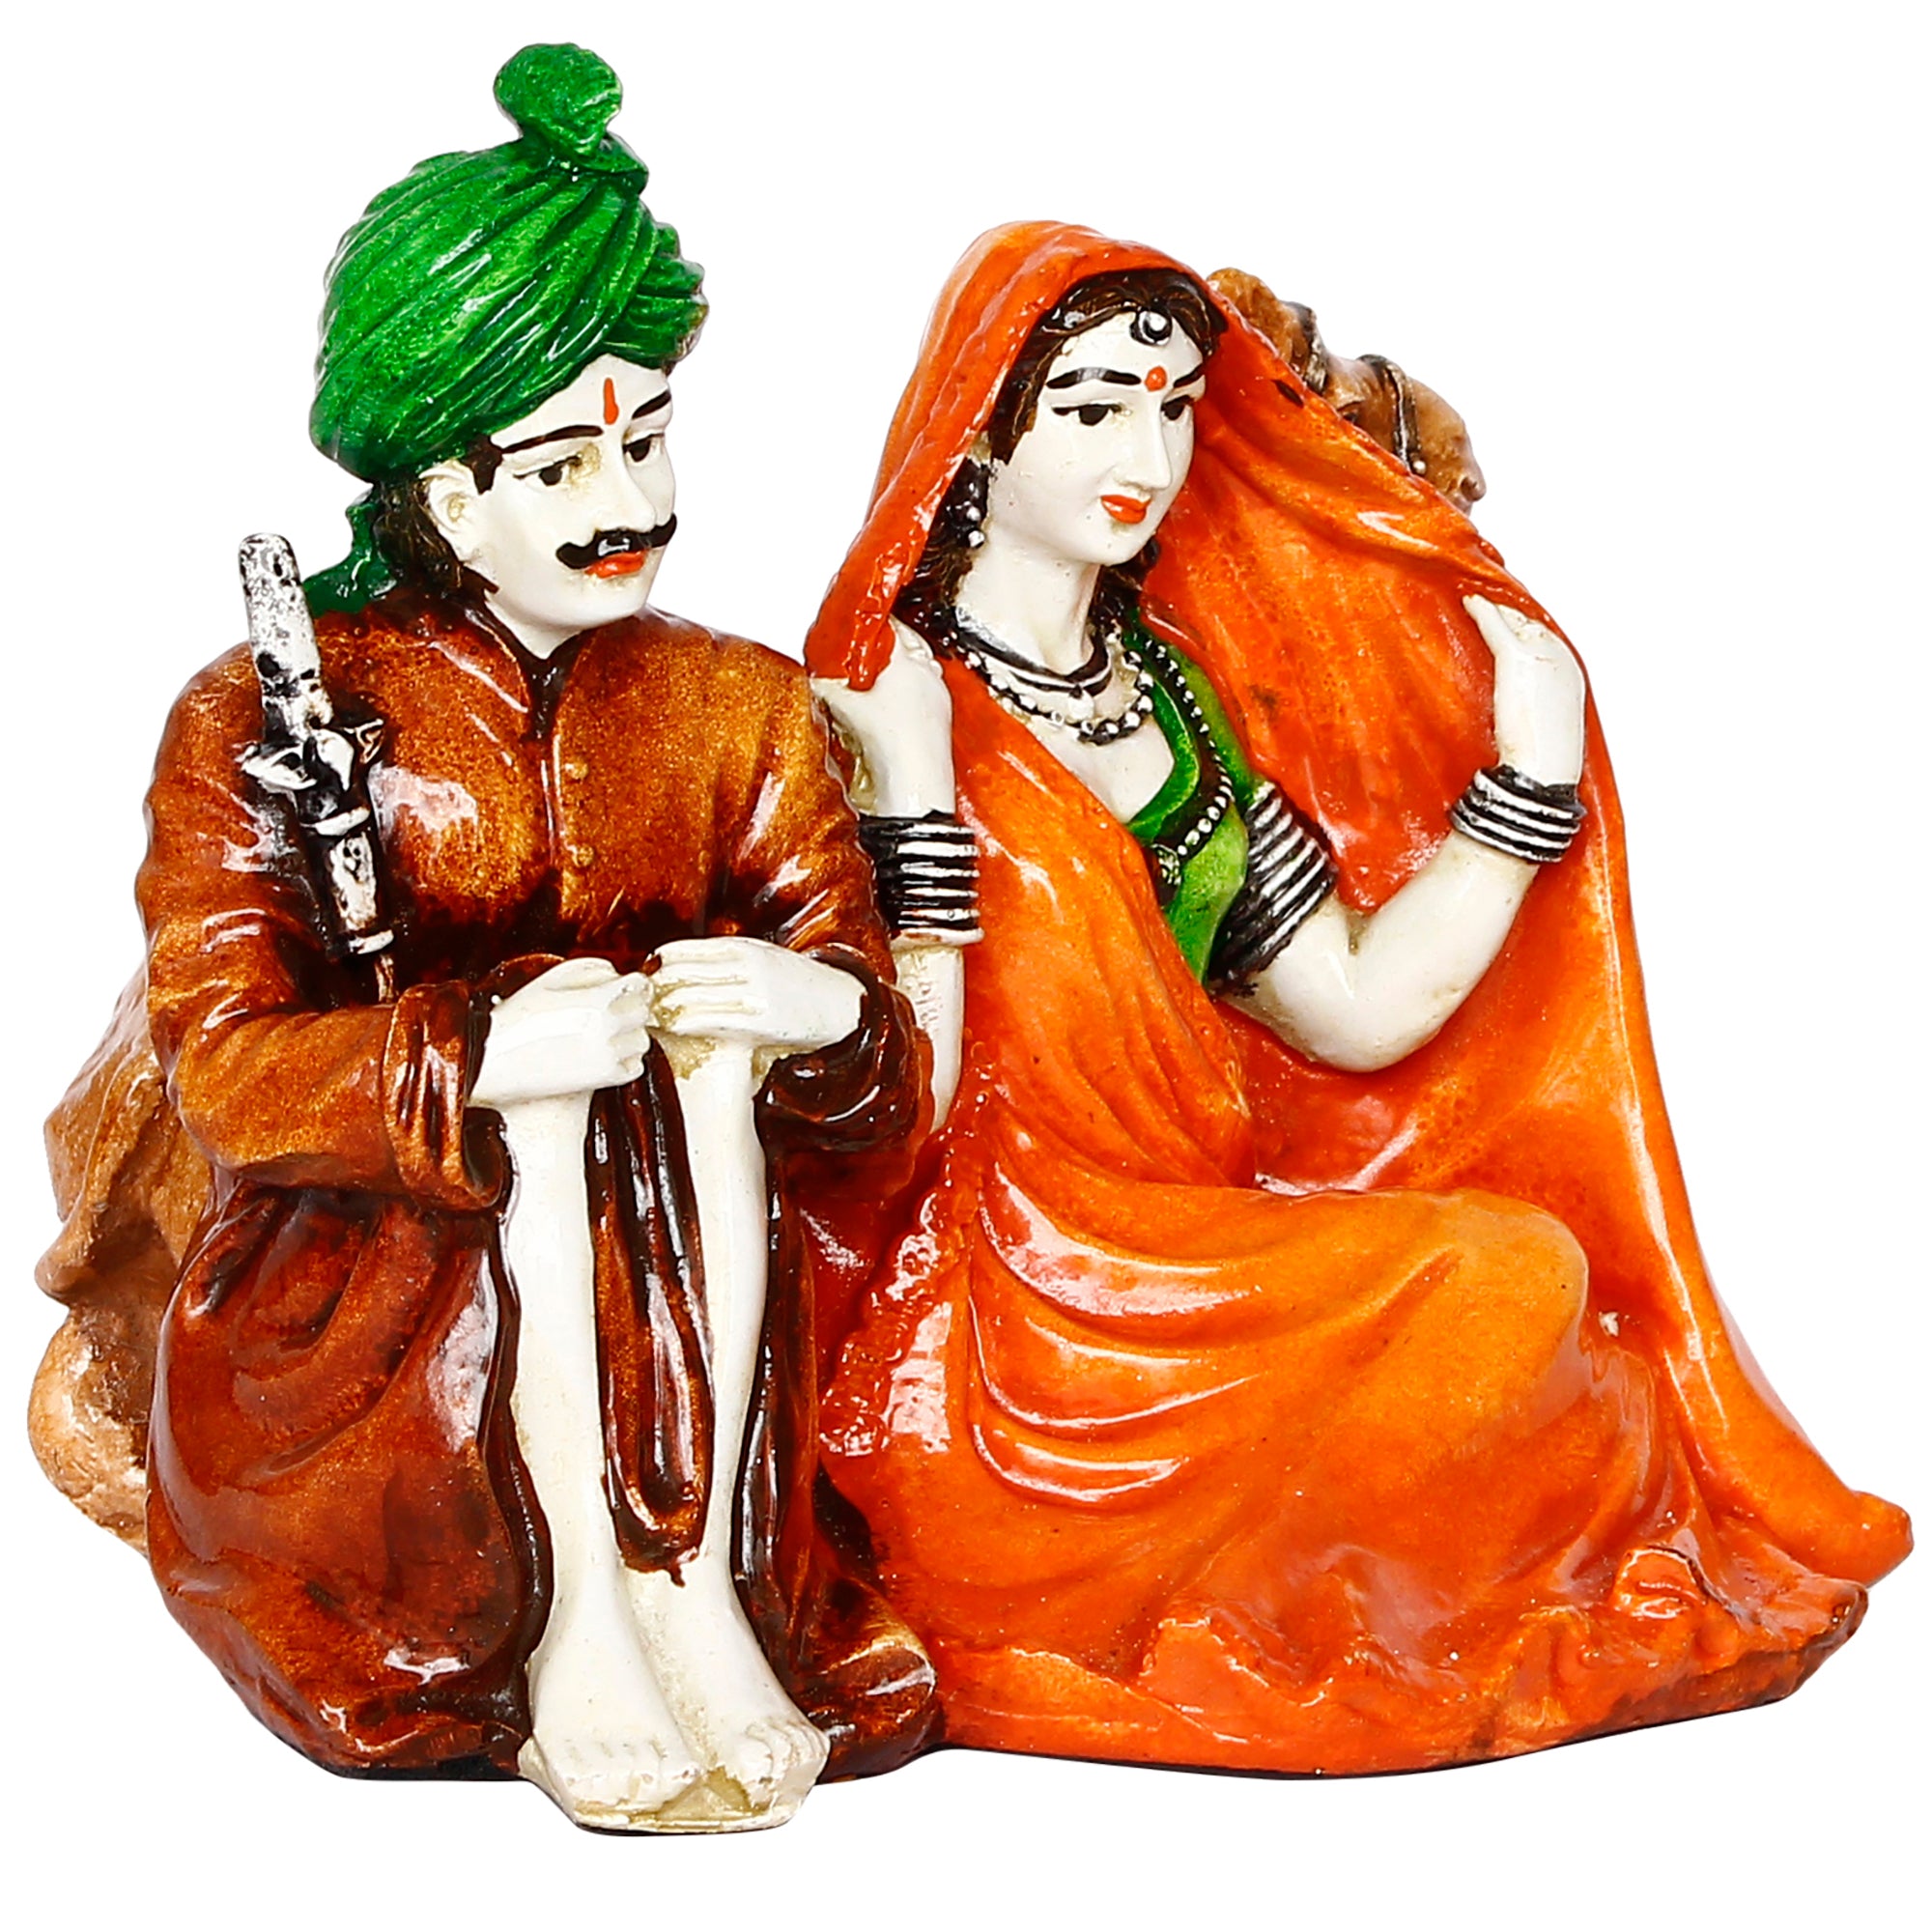 Combo Of Rajasthani Couple Sitting Together Human Figurines Decorative Showpiece 5